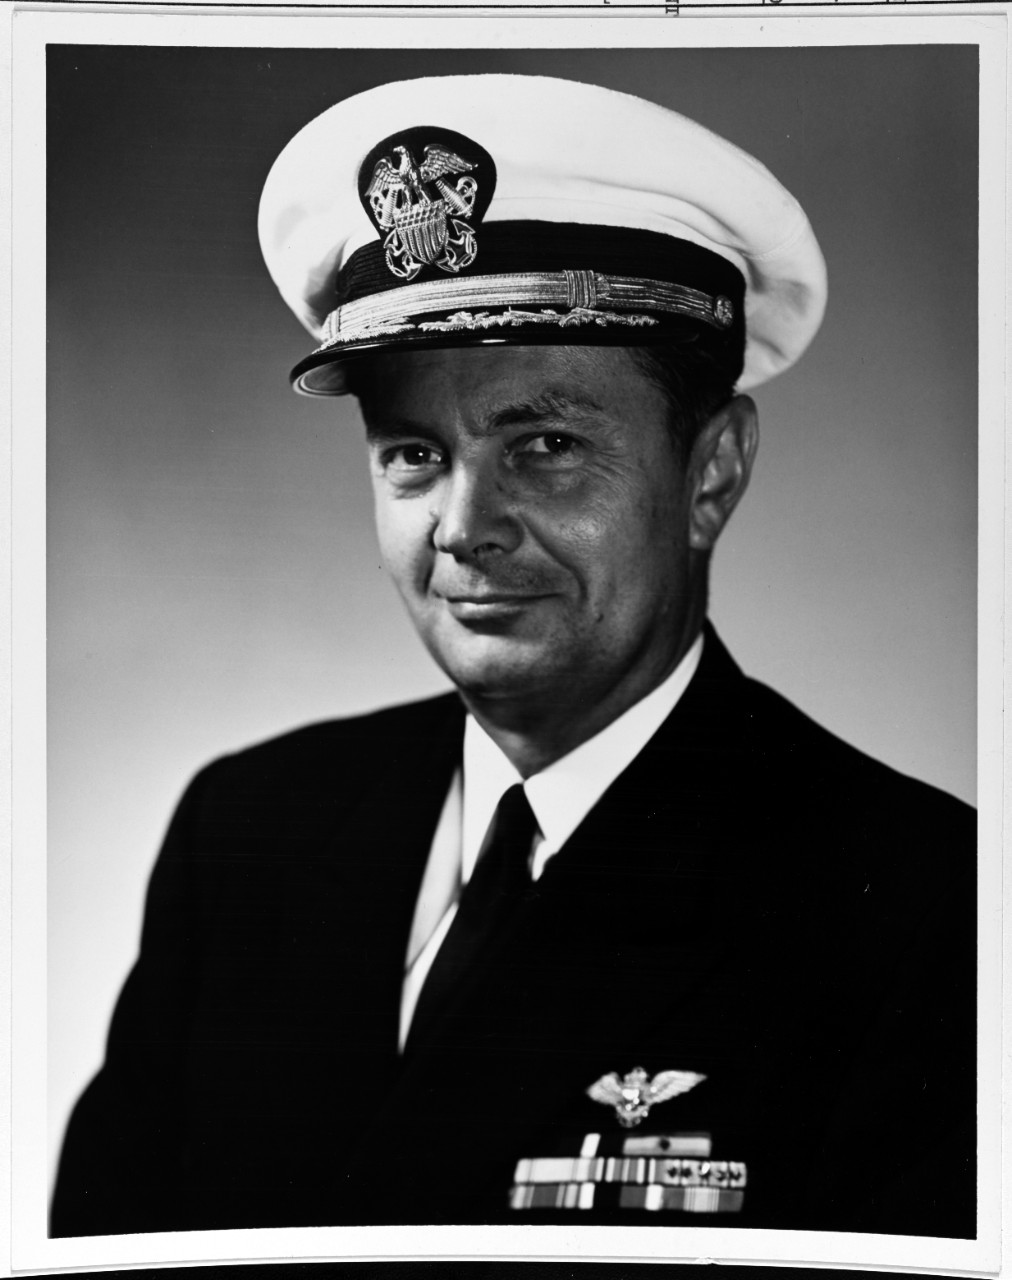 Tazwell T. Shepard, Jr., Captain, USN